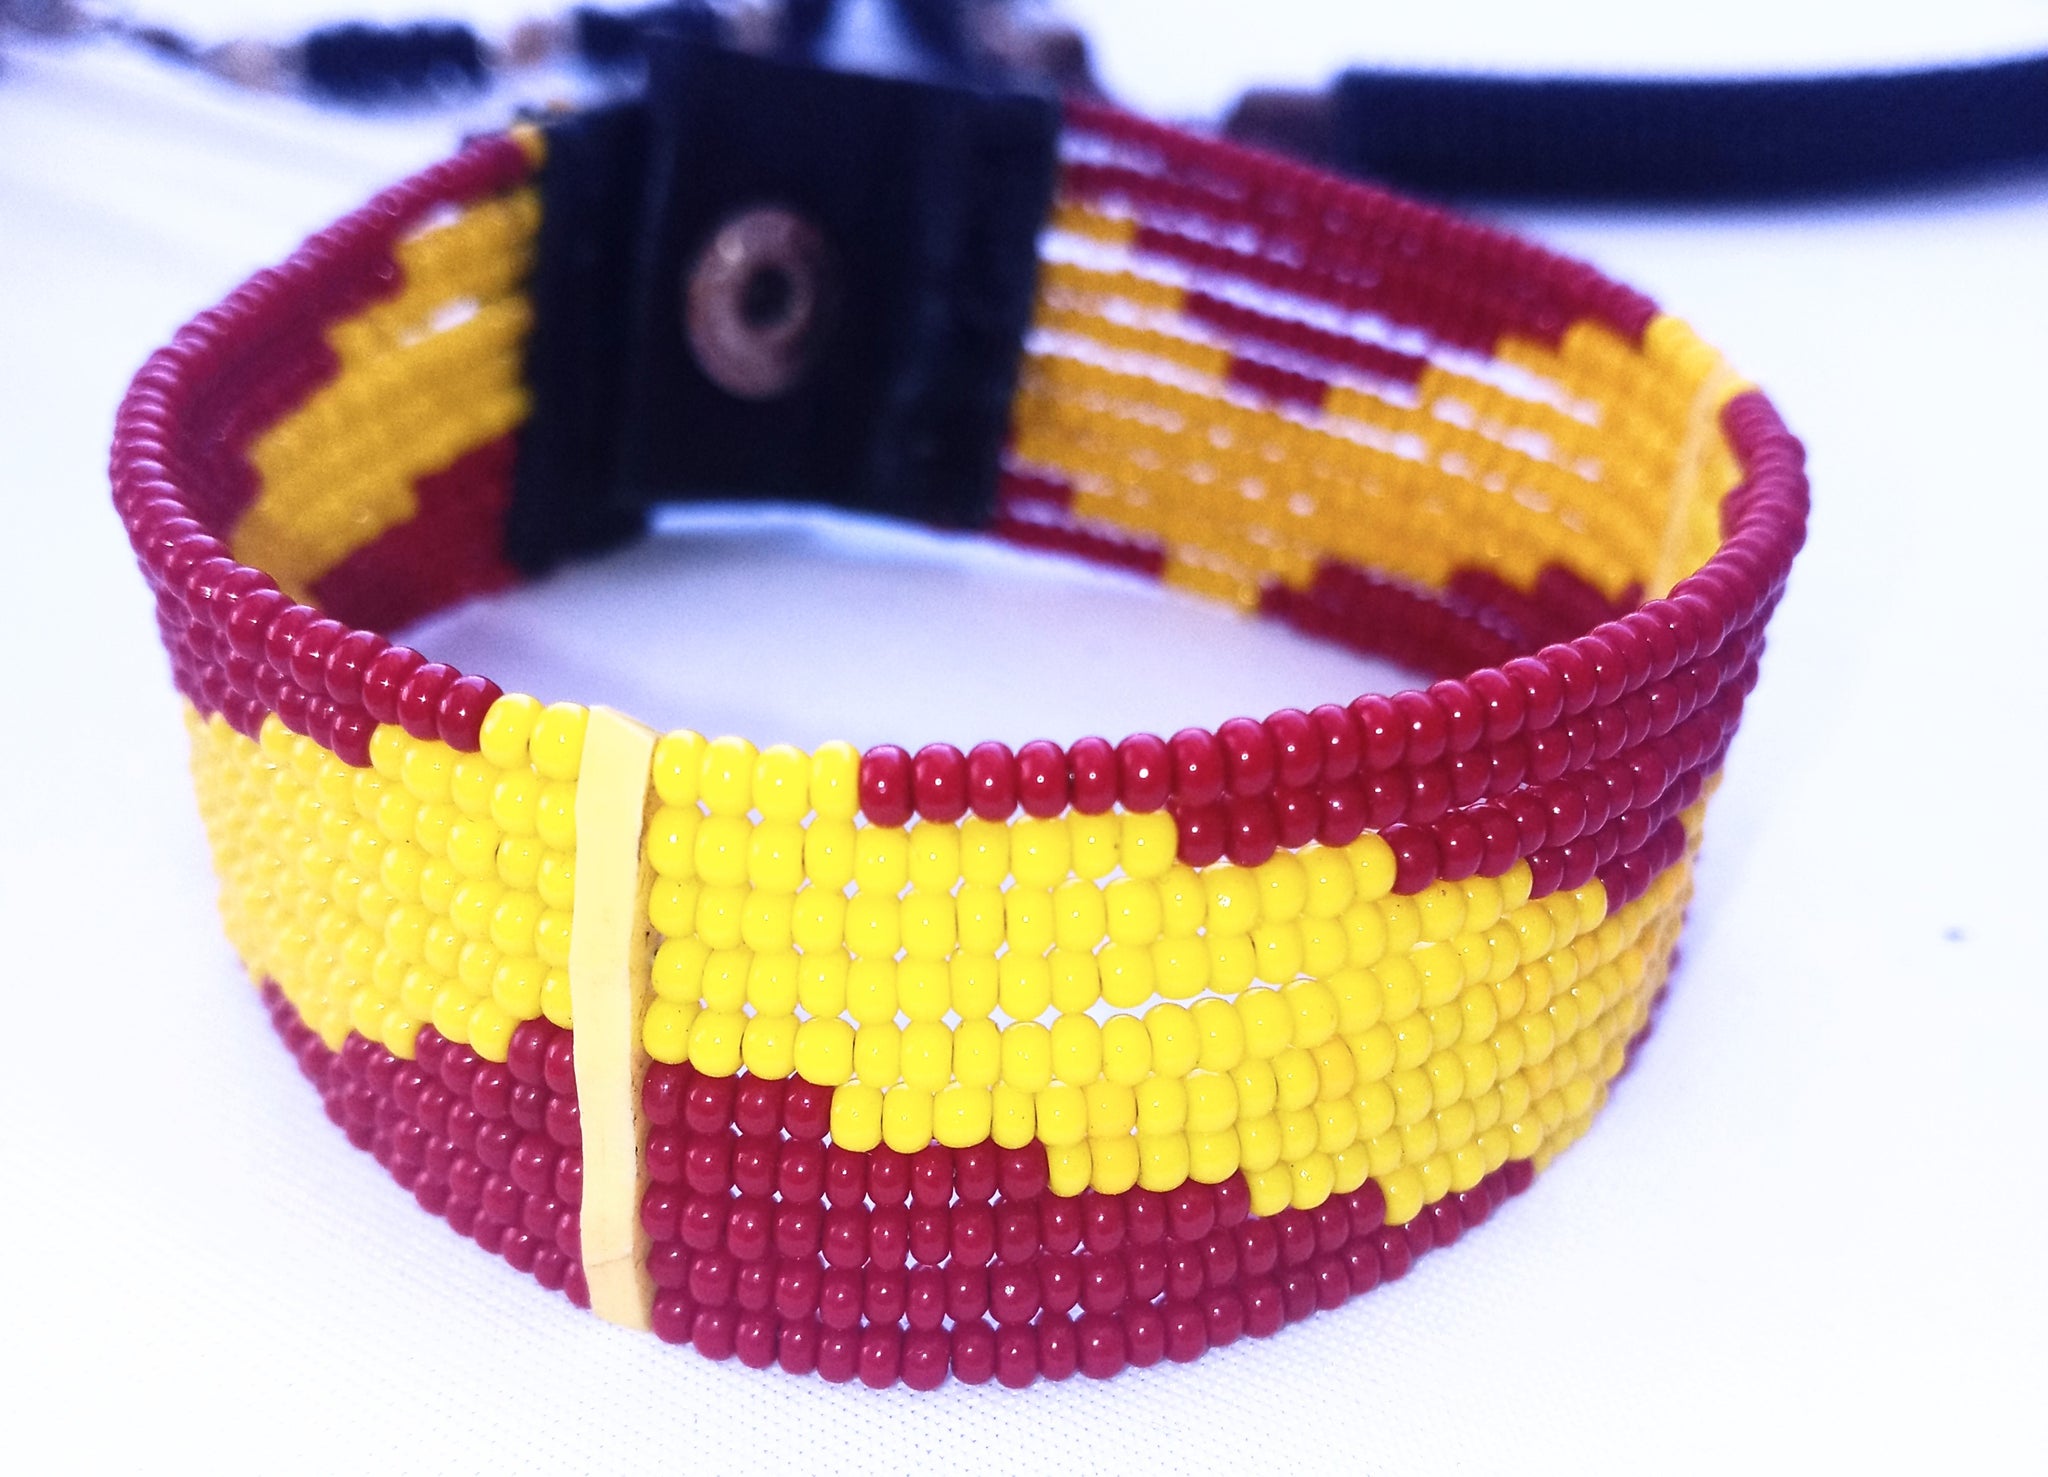 Maasai bracelets/bangles